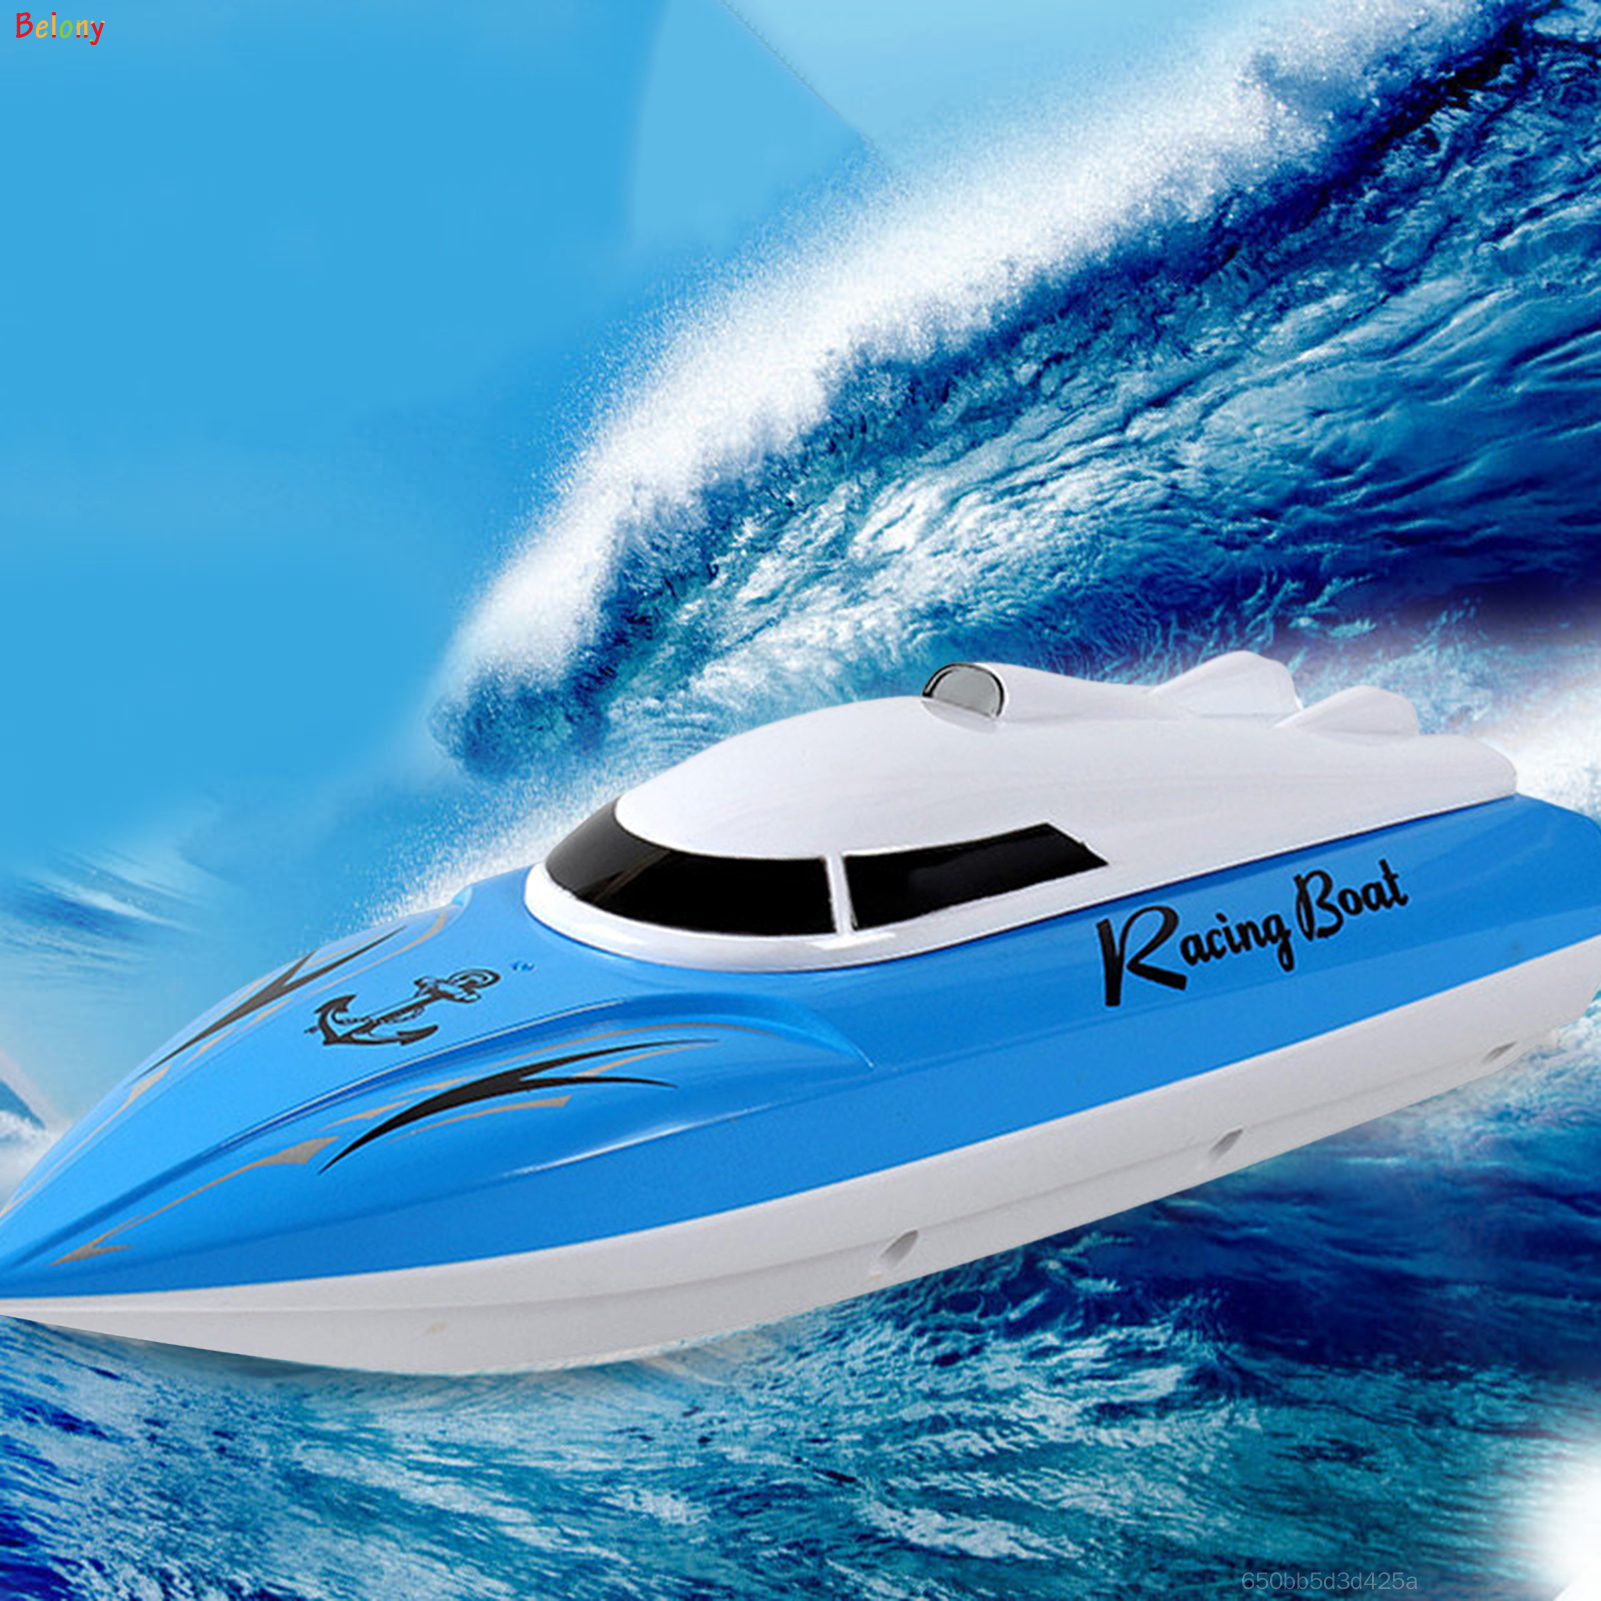 Waterproof RC Boat Toys Electric Racing Boat Waterproof Speed Control